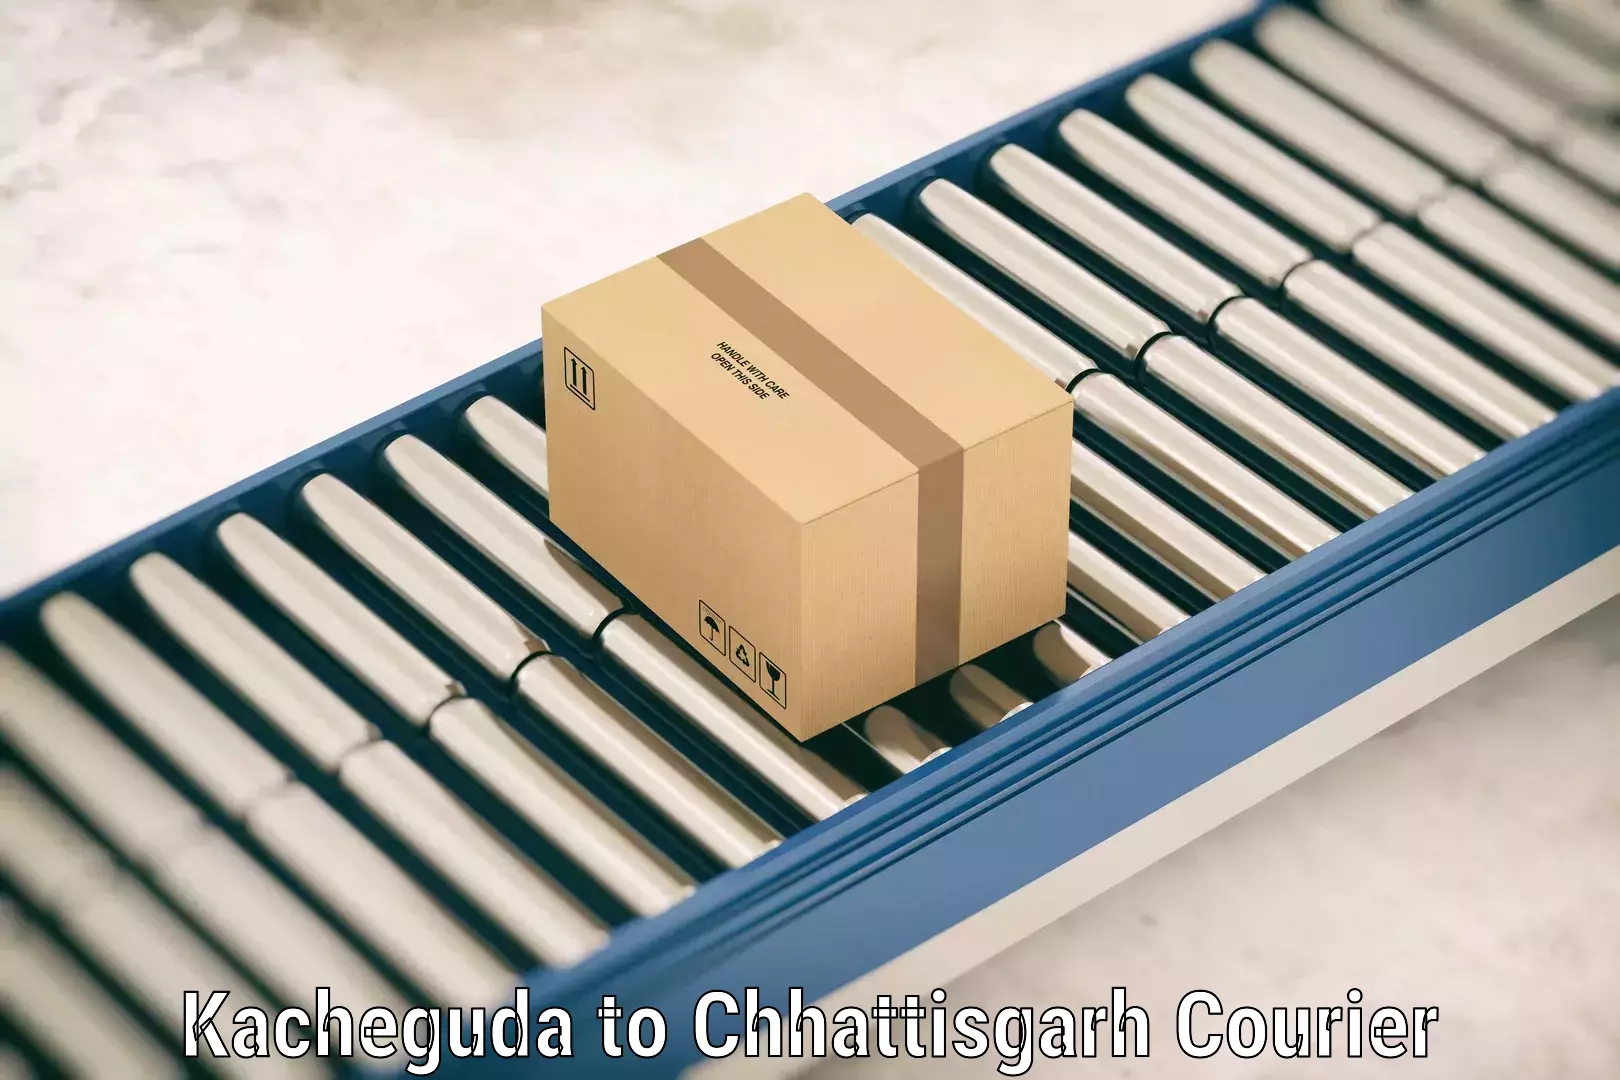 Luggage shipment specialists Kacheguda to Nagri